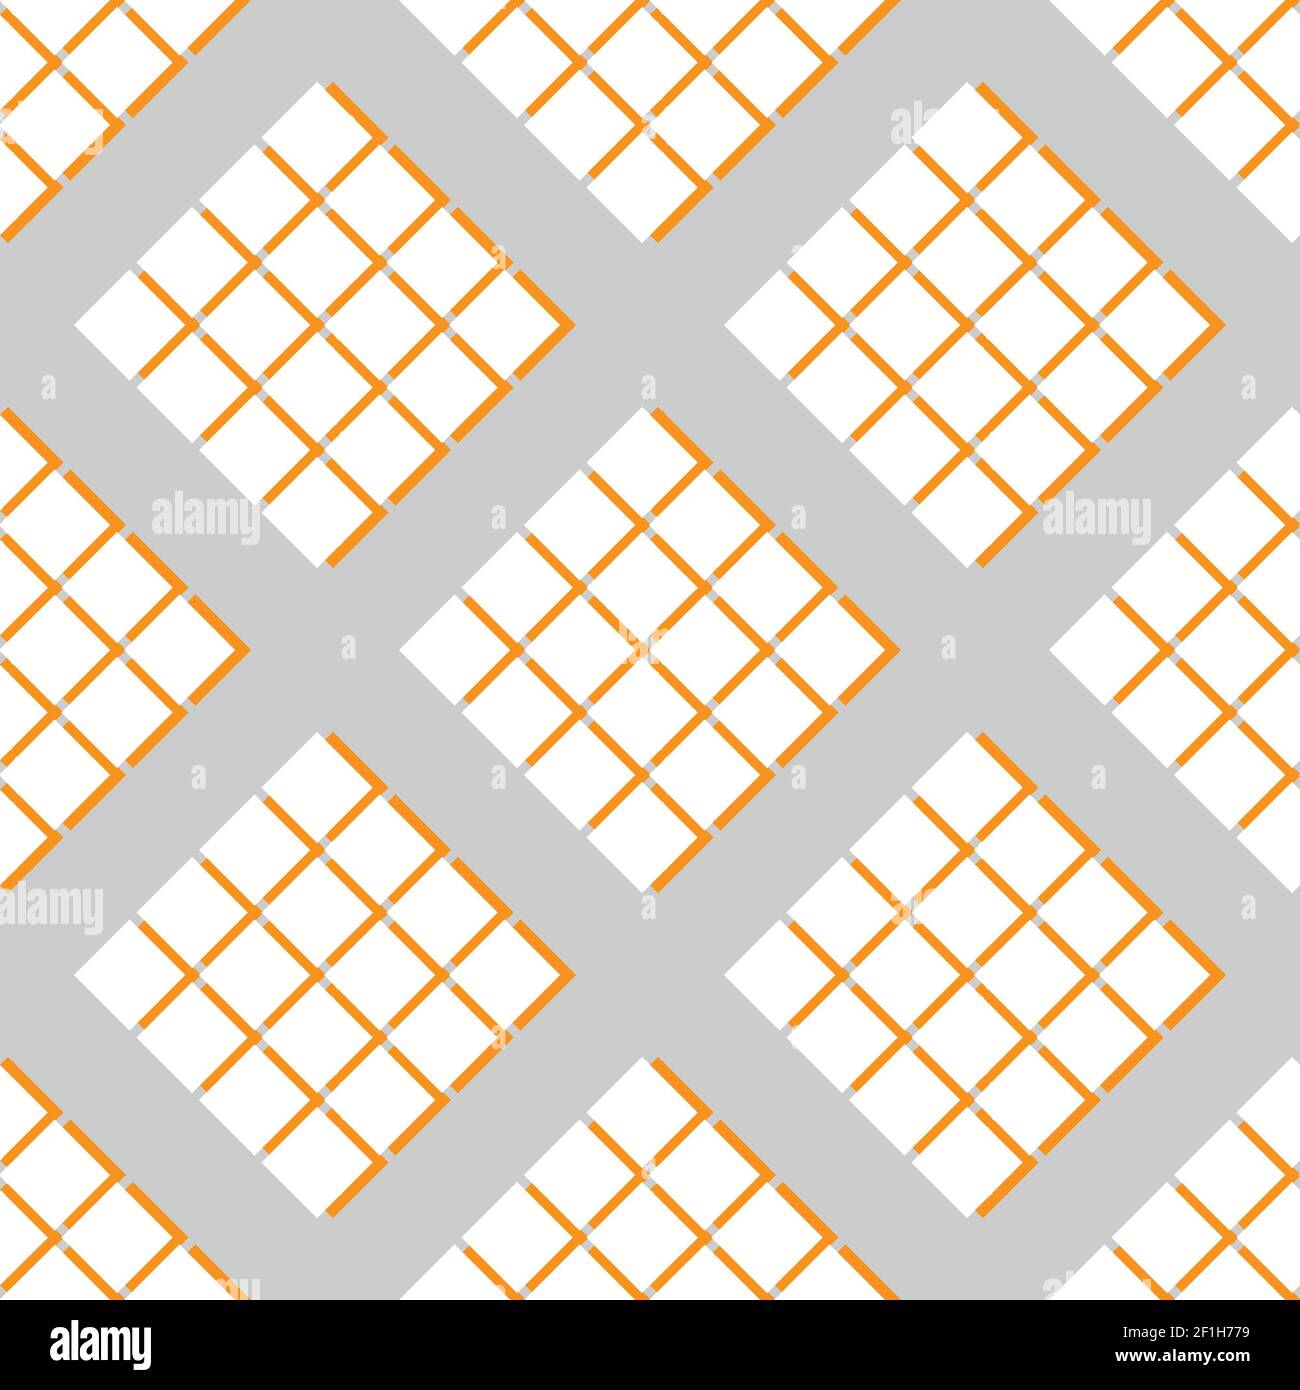 Seamless pattern of rhombuses Stock Photo